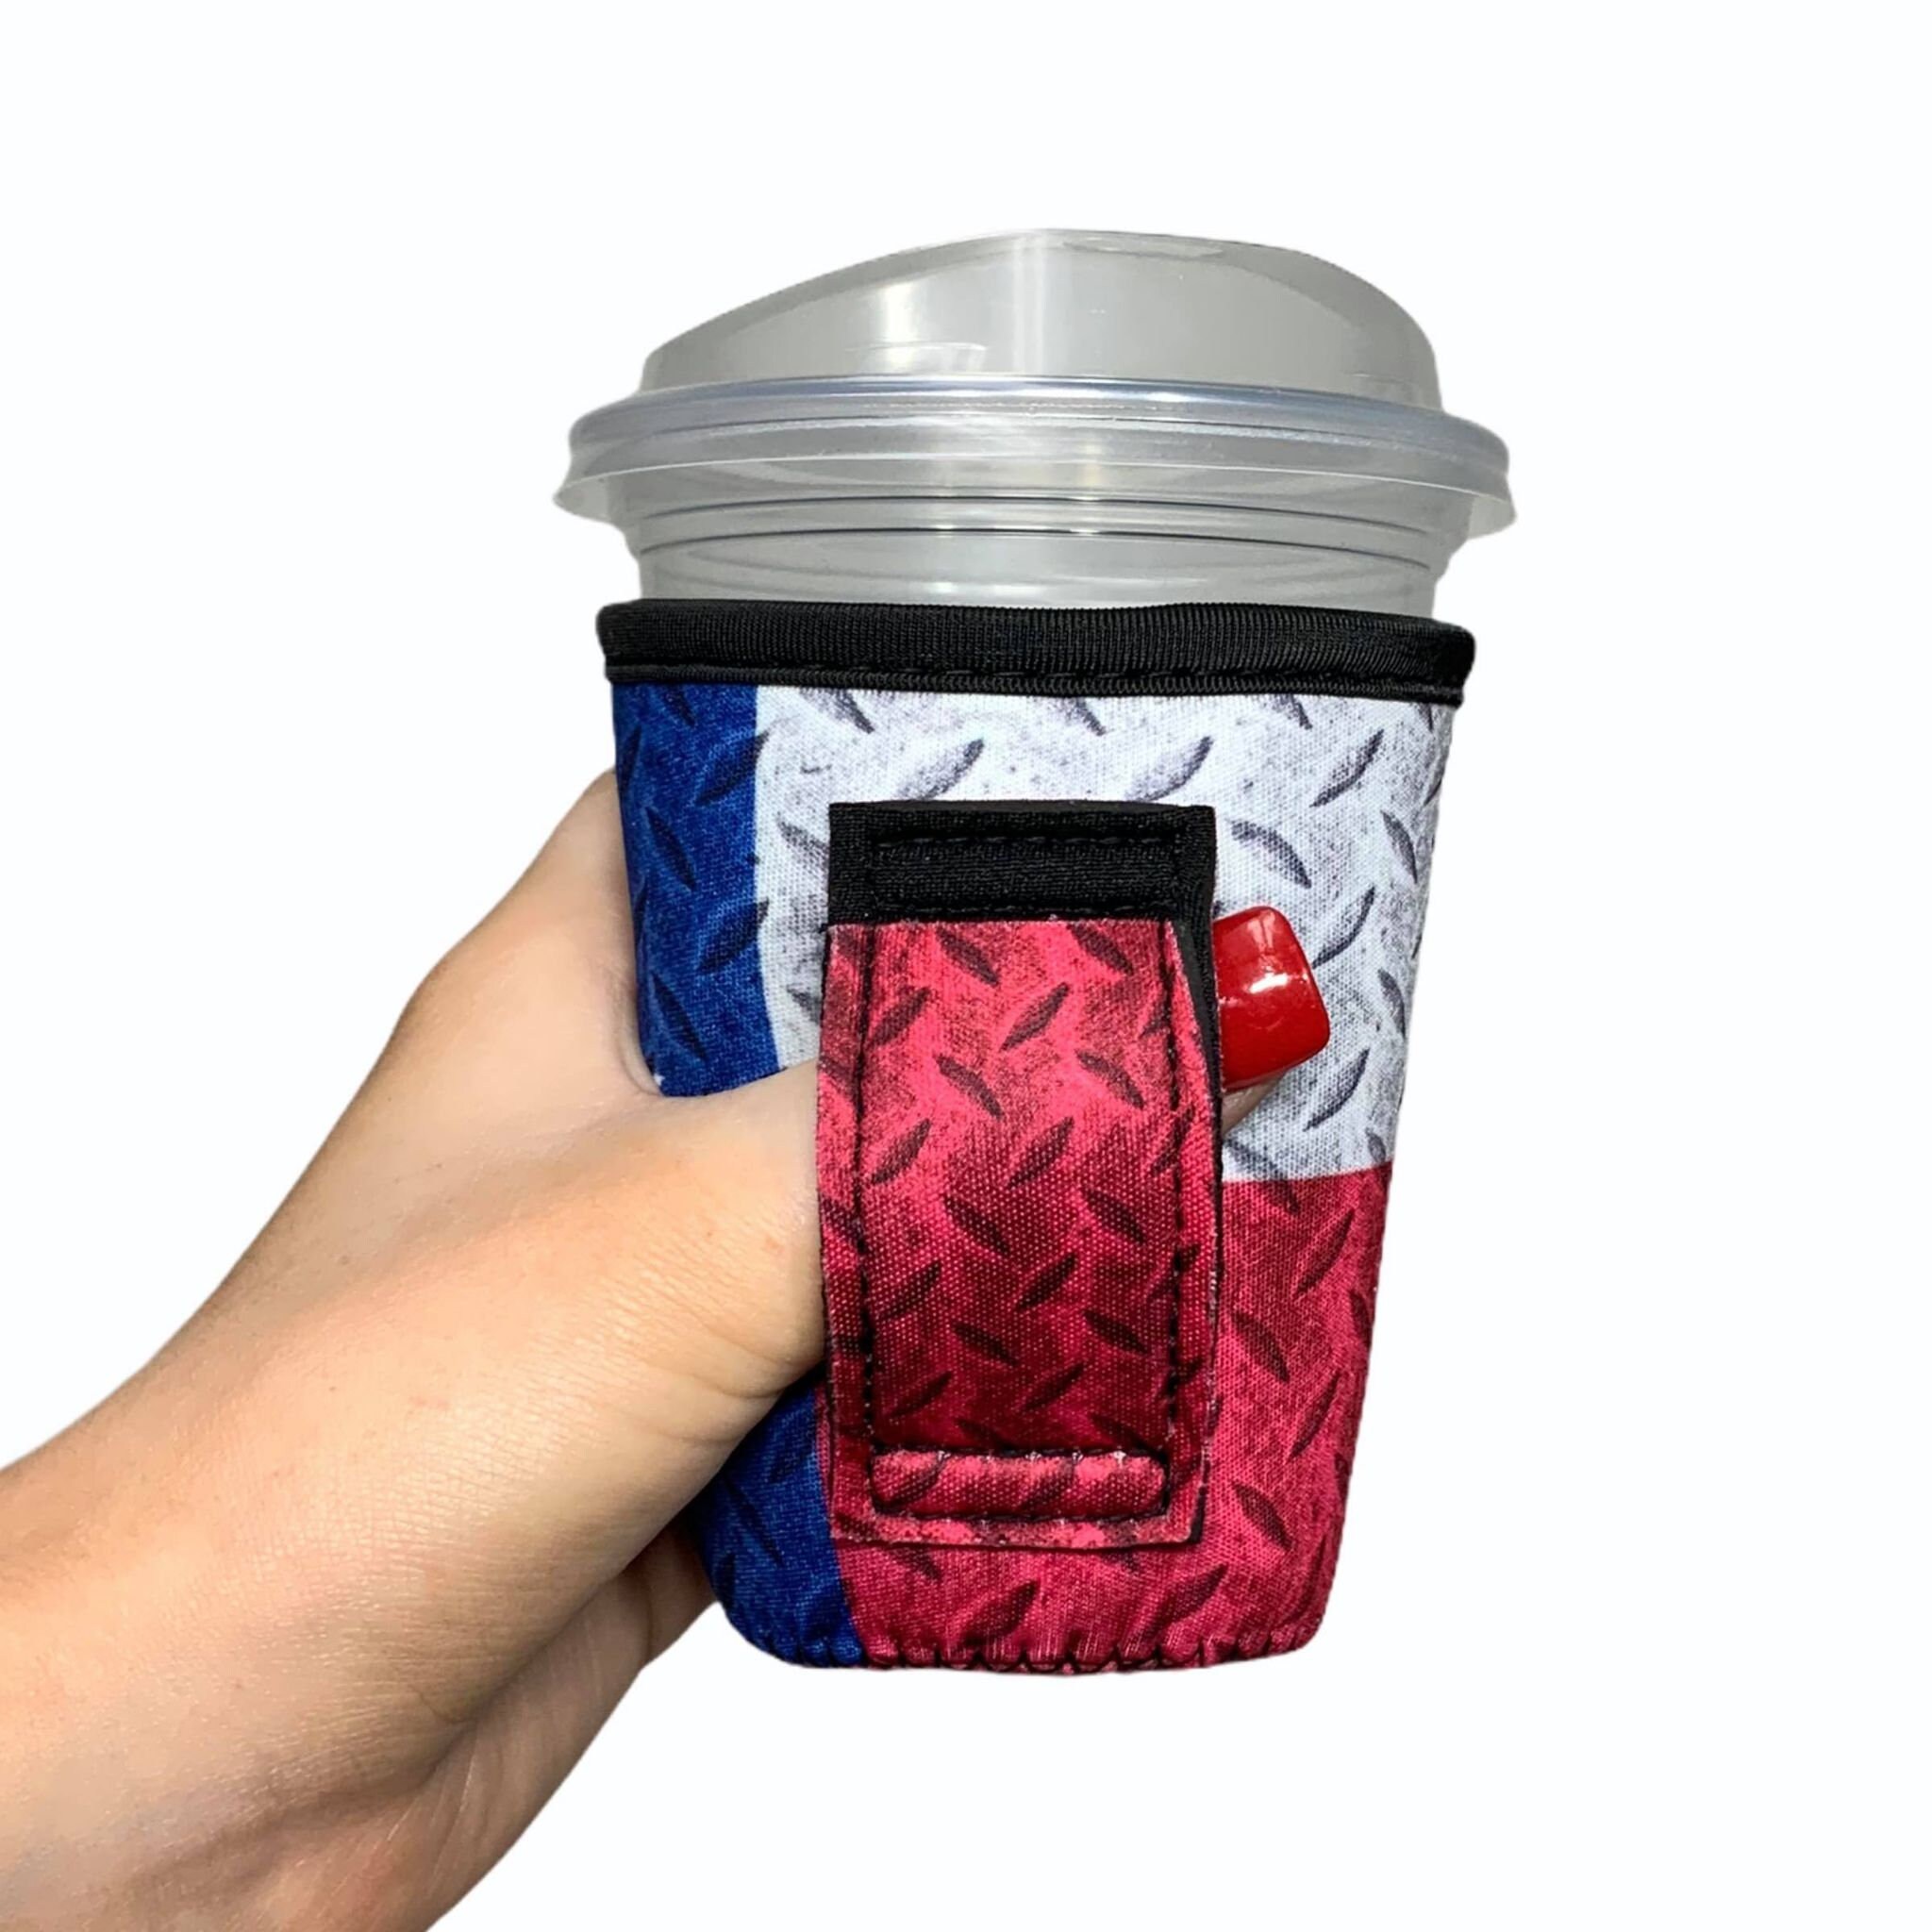 Lit Handlers 12 oz Coffee Cup Sleeve - Neoprene Cup Holder with